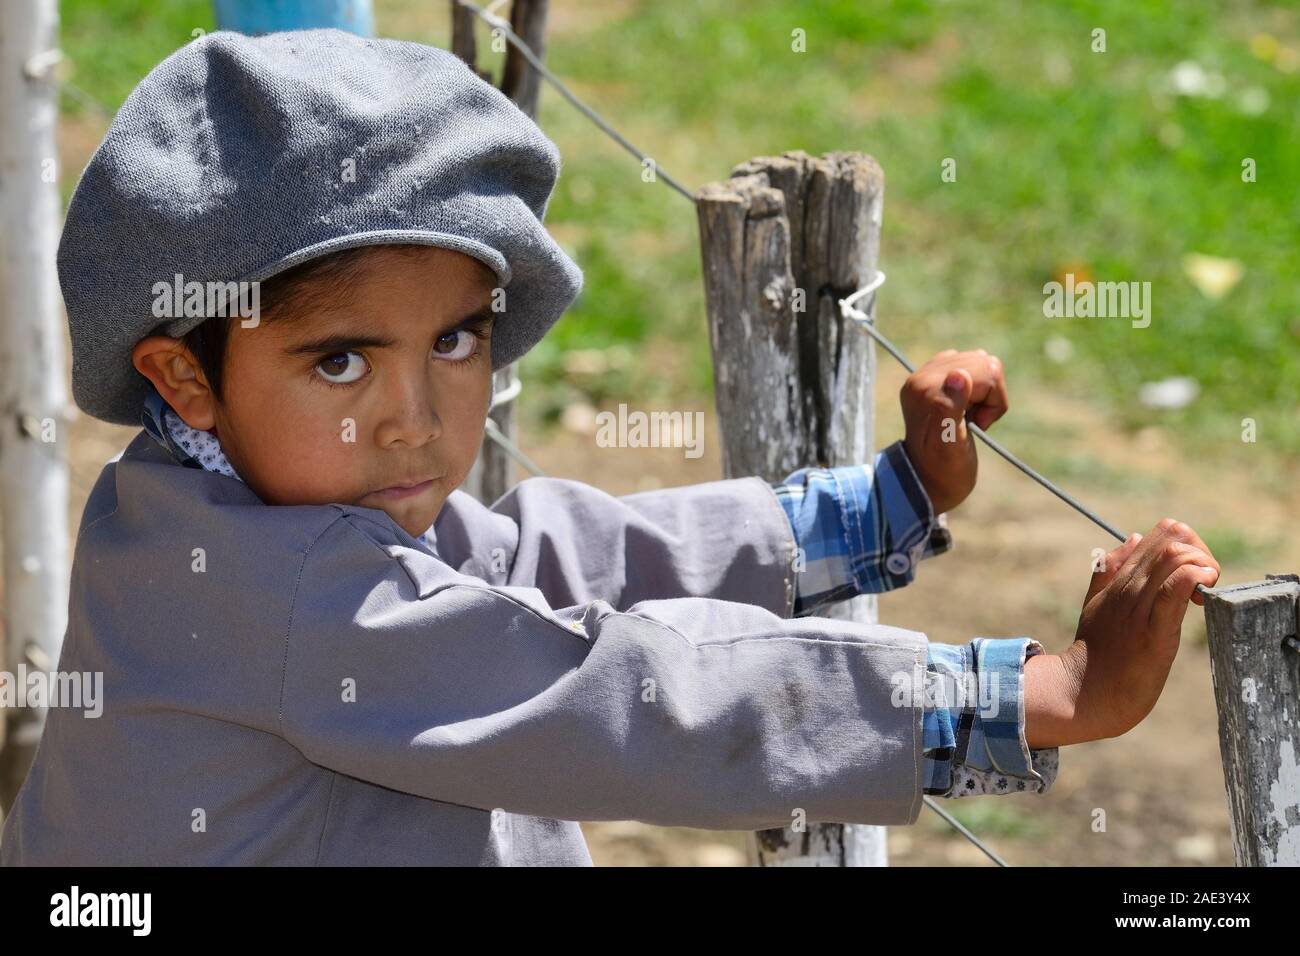 Boy with typical cap looks suspicious, Junin de los Andes, province Neuquen, Argentina Stock Photo